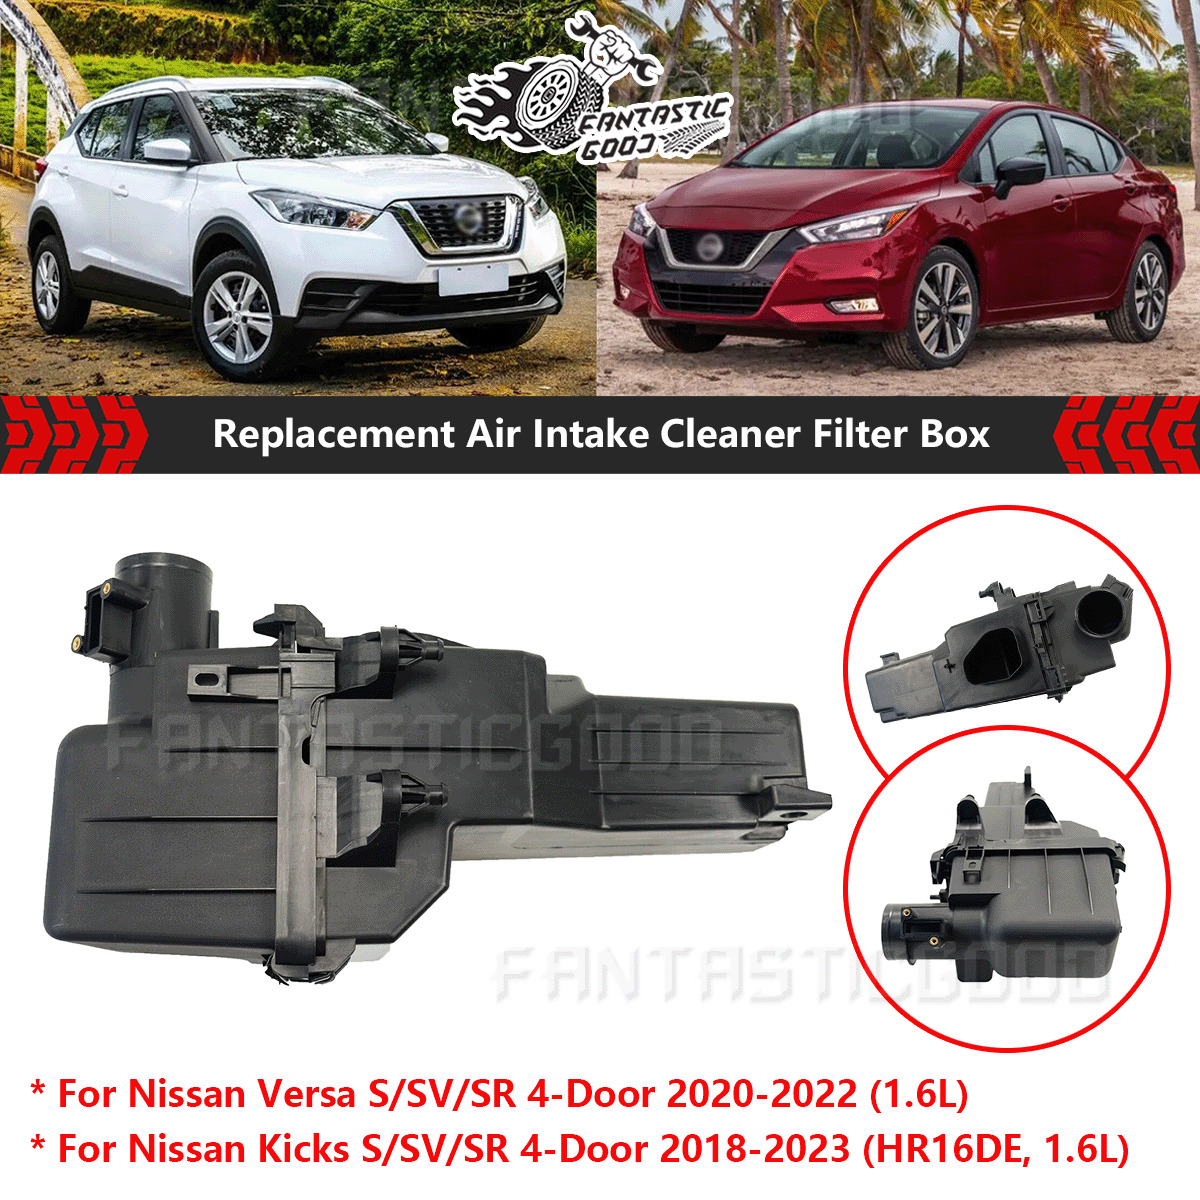 For Nissan 1.6L Kicks / Versa 2018-23 Air Intake Cleaner Filter Box Replacement